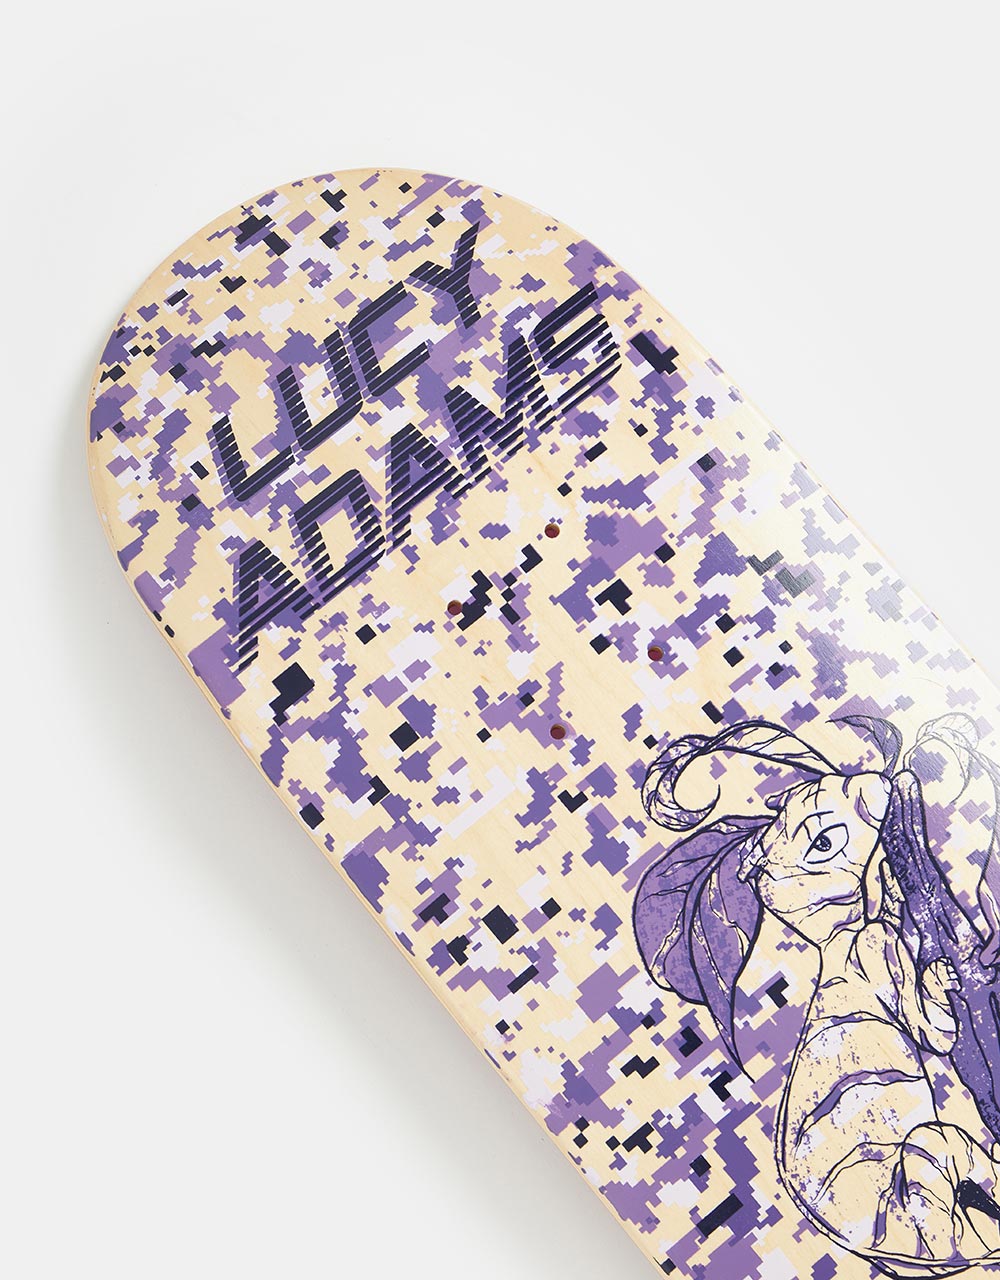 Lovenskate 'Lucy Master of Camouflage' Pro Skateboard Deck - 8.25"